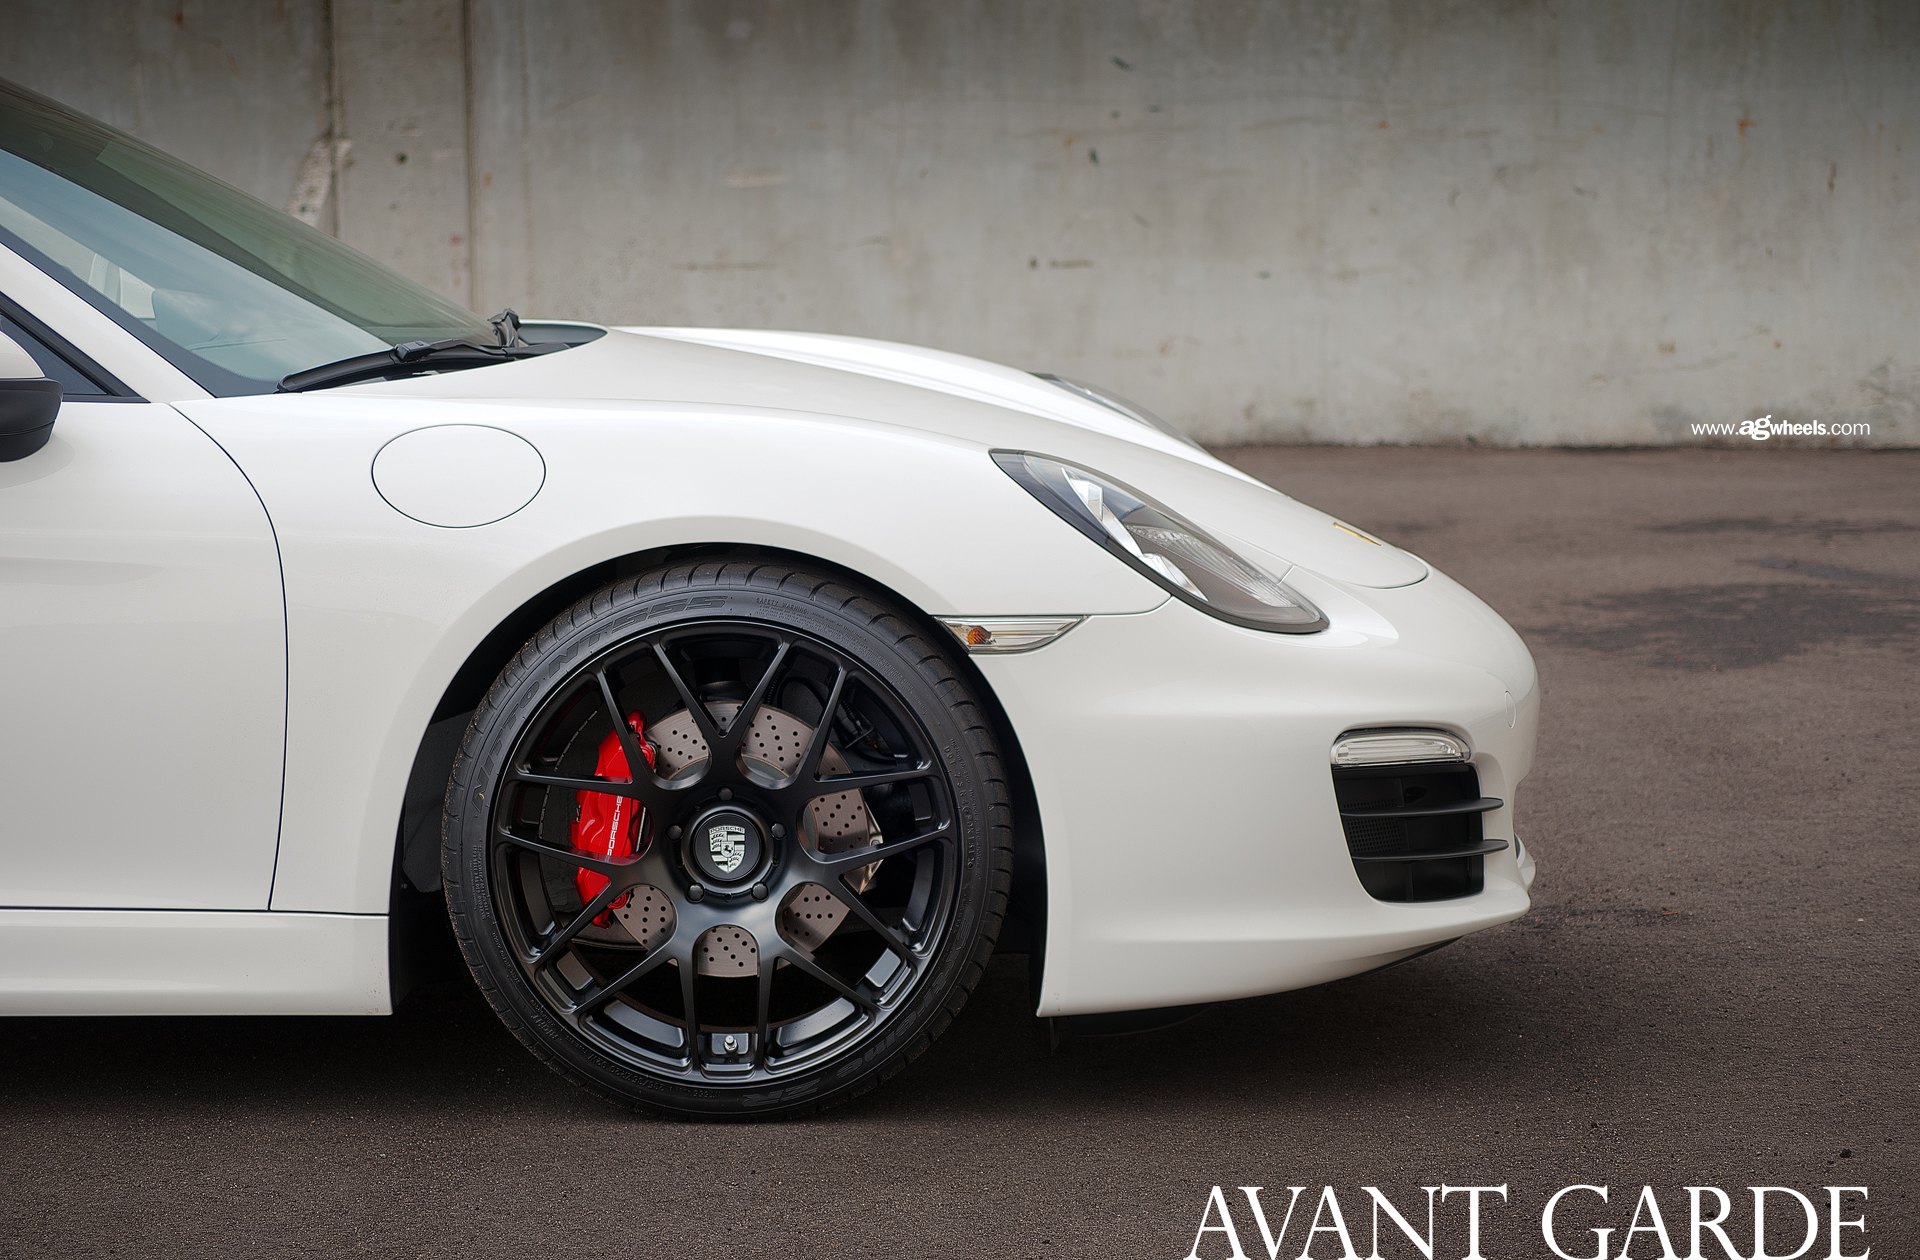 Matte Black Avant Garde Rims on White Porsche Boxster - Photo by Avant Garde Wheels